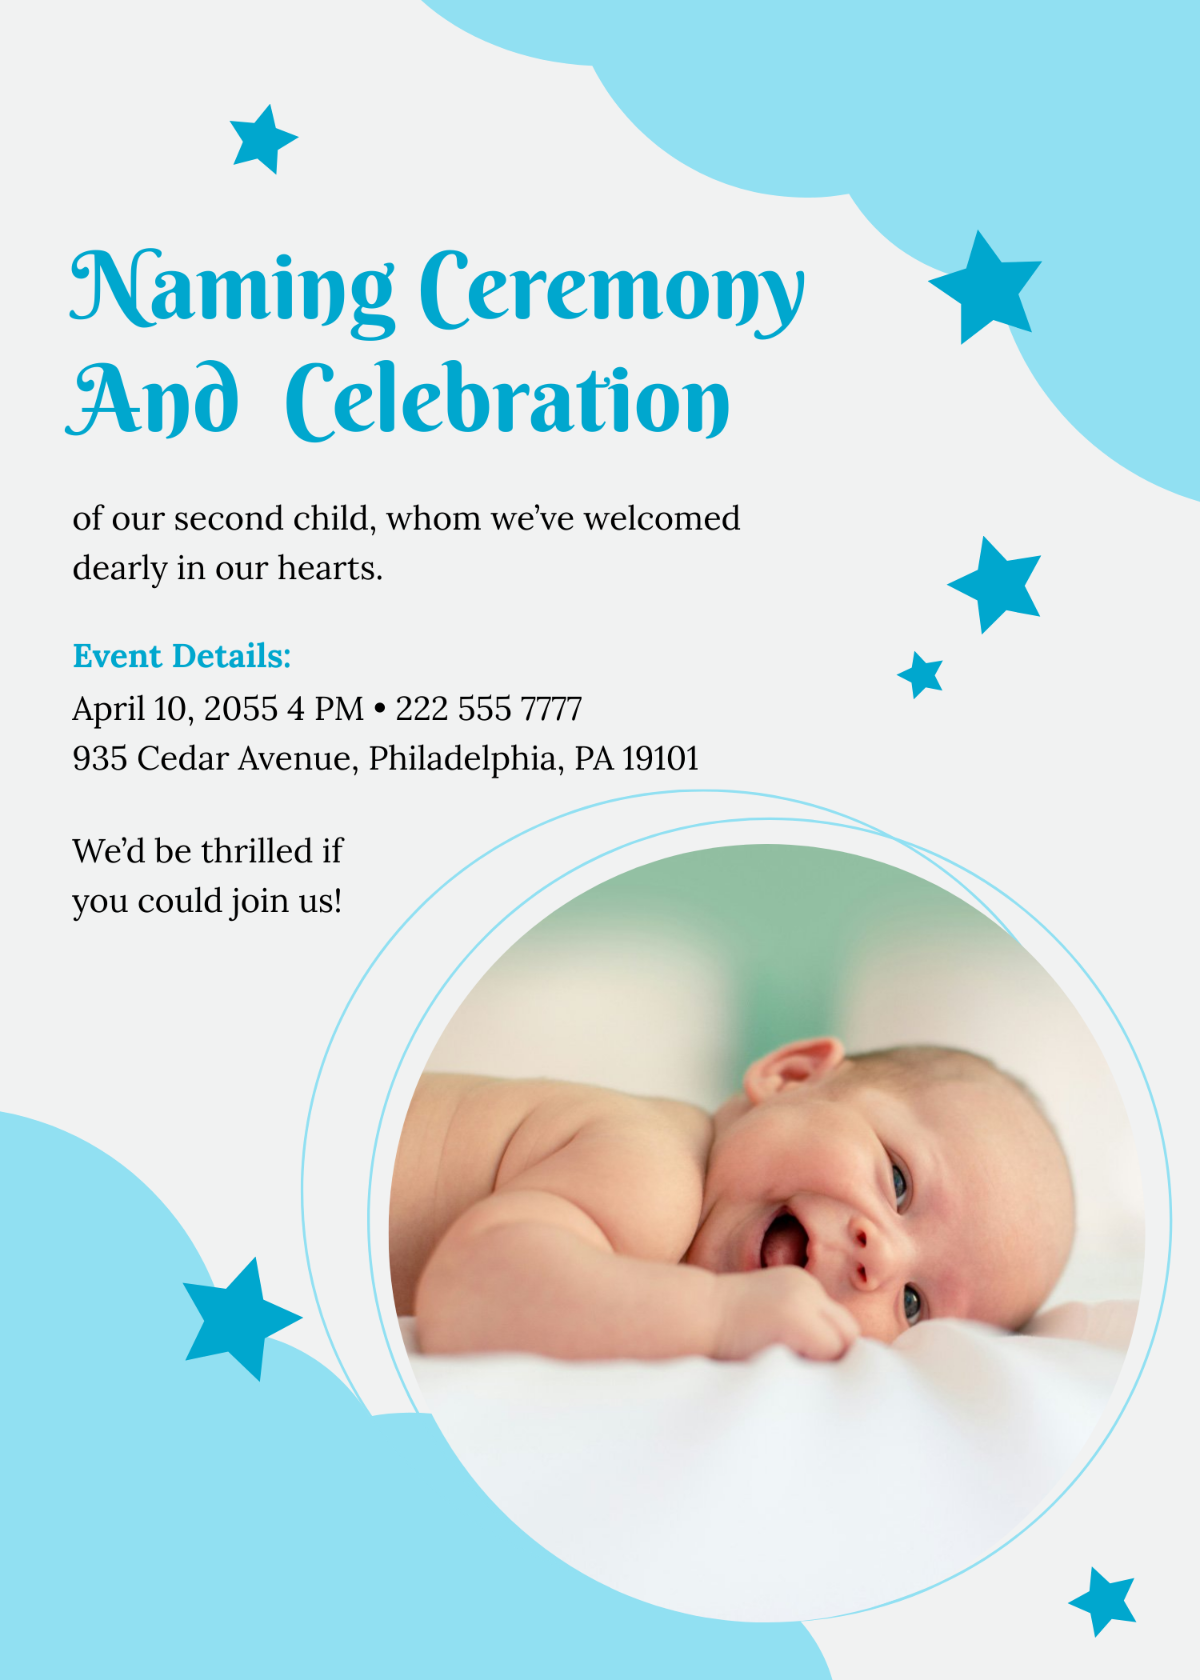 Naming Ceremony Invitation For Second Child